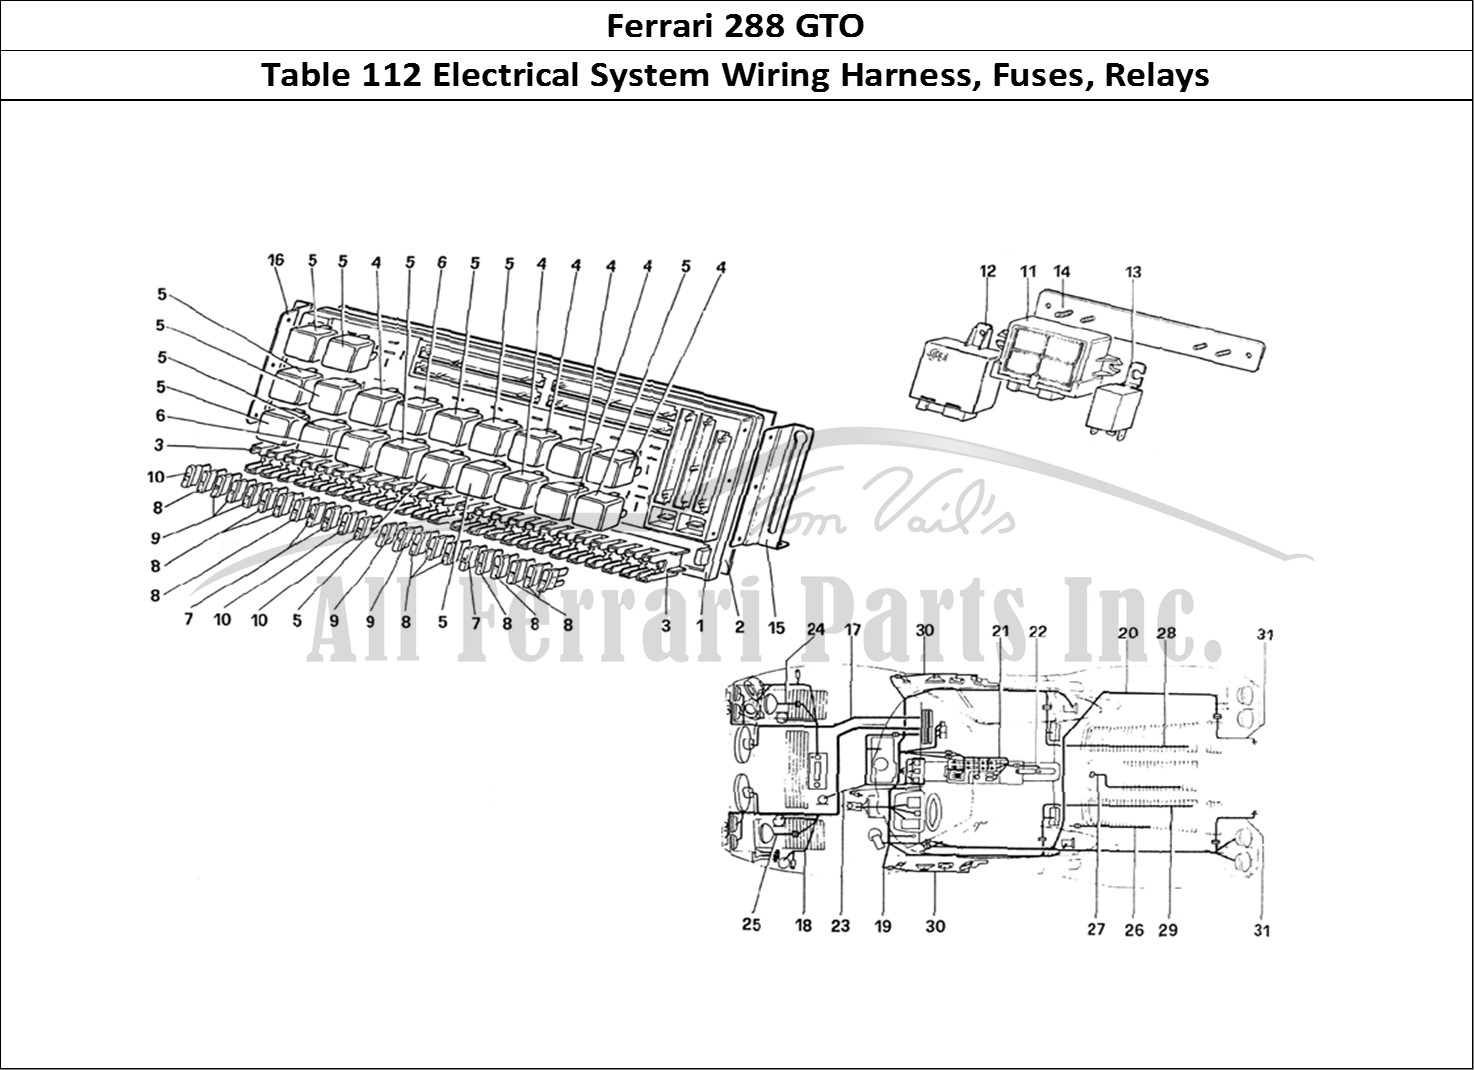 Ferrari Parts Ferrari 288 GTO Page 112 Electrical System - Fuses